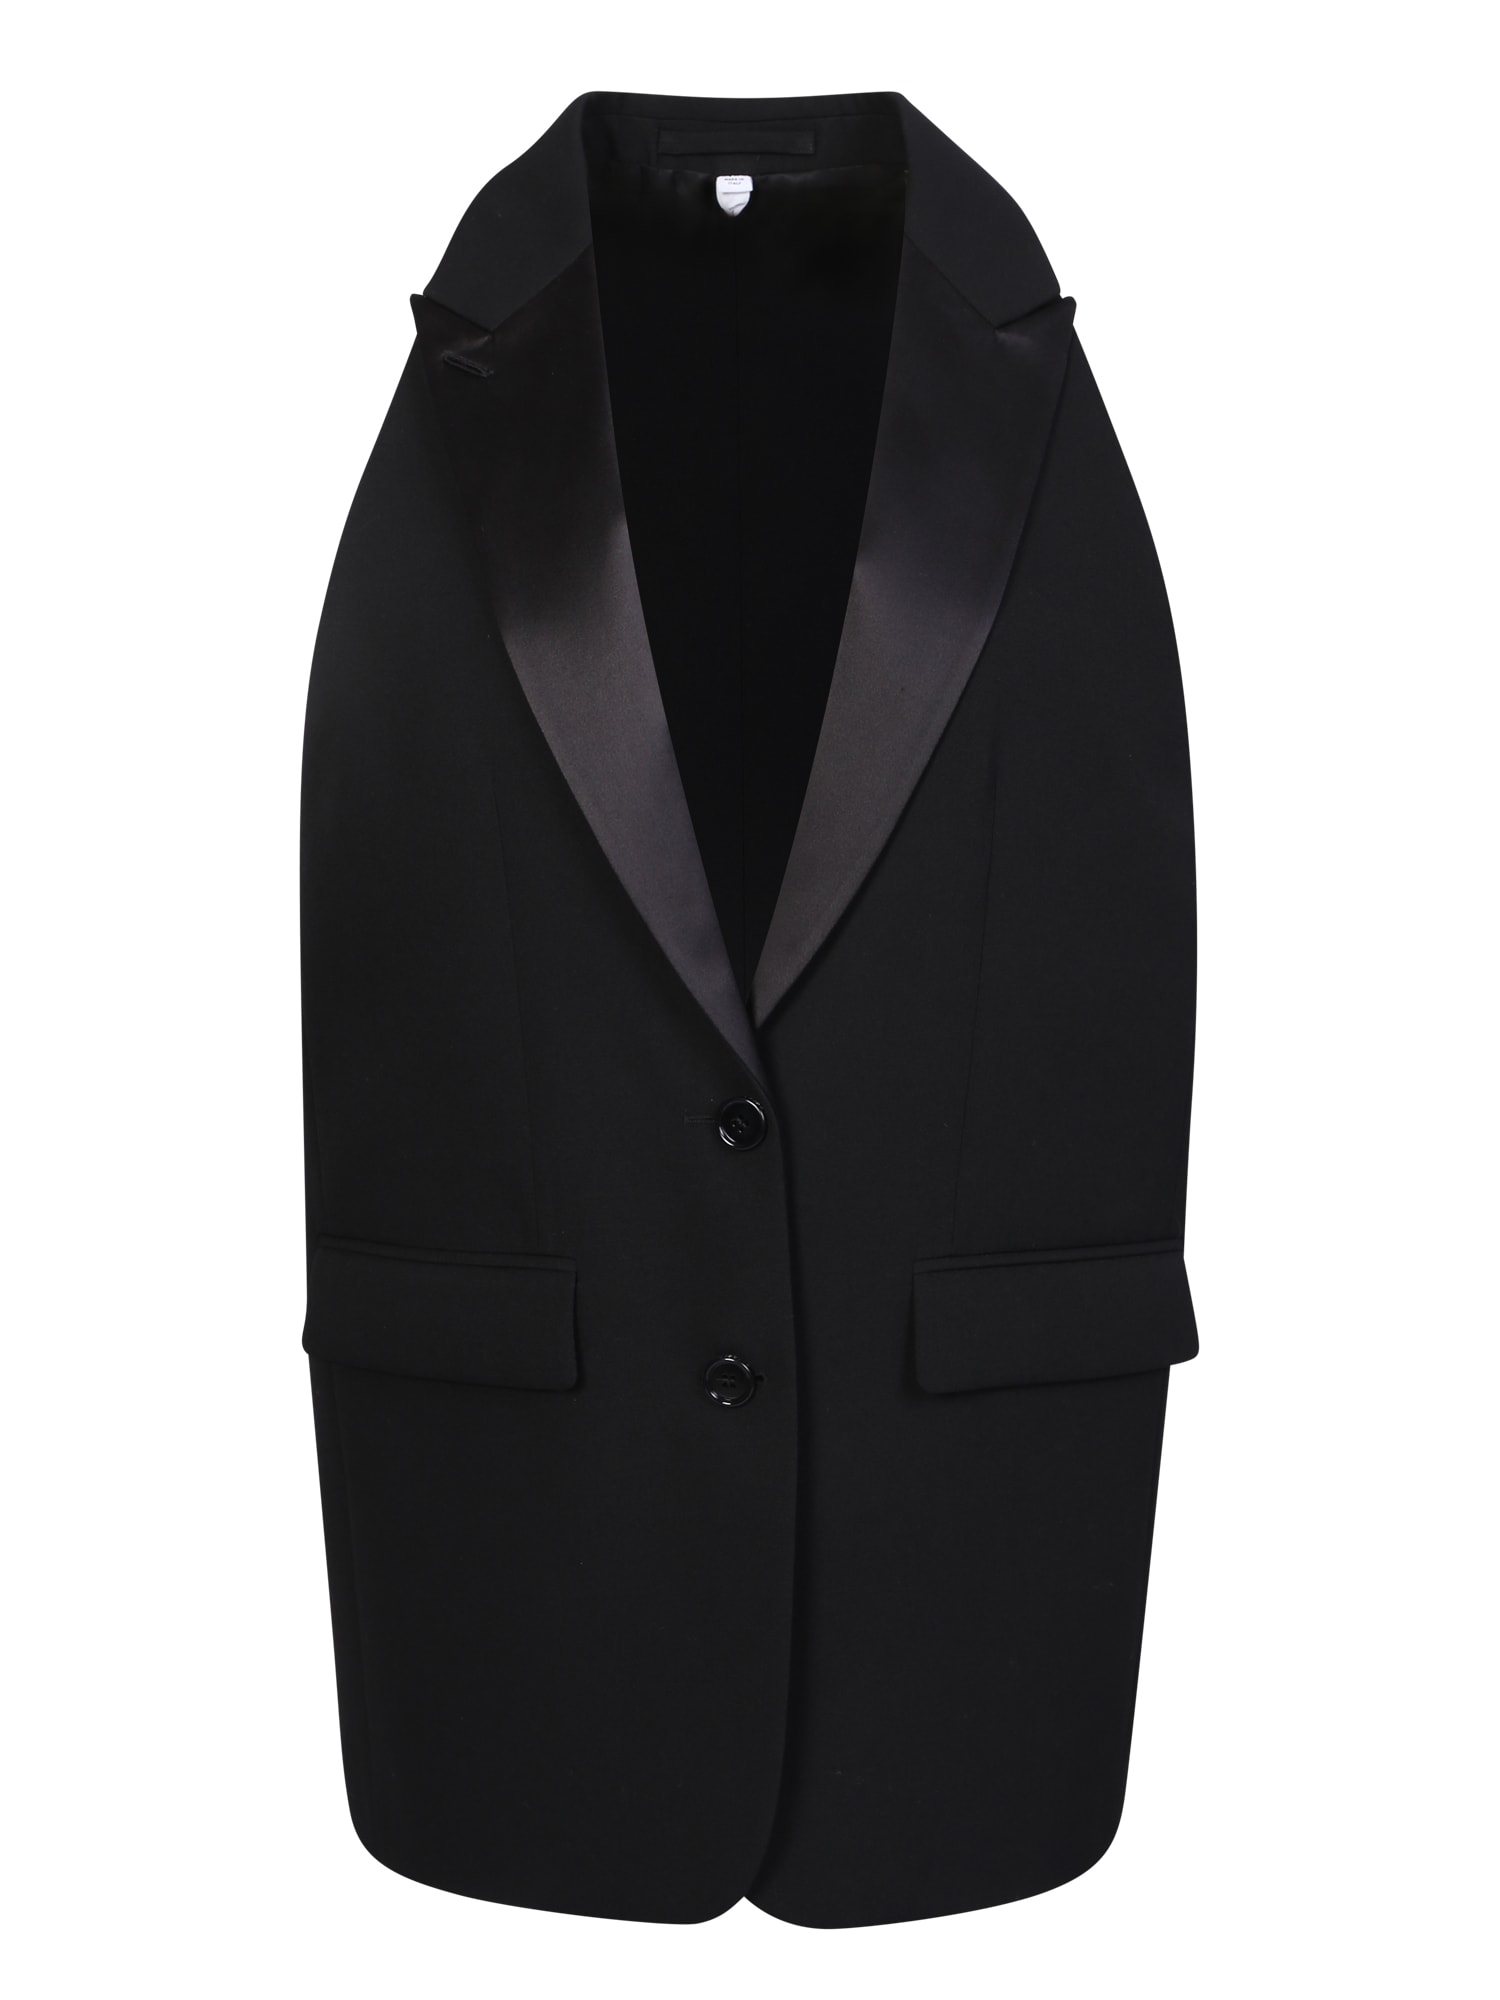 Black Tailored Sleeveless Jacket